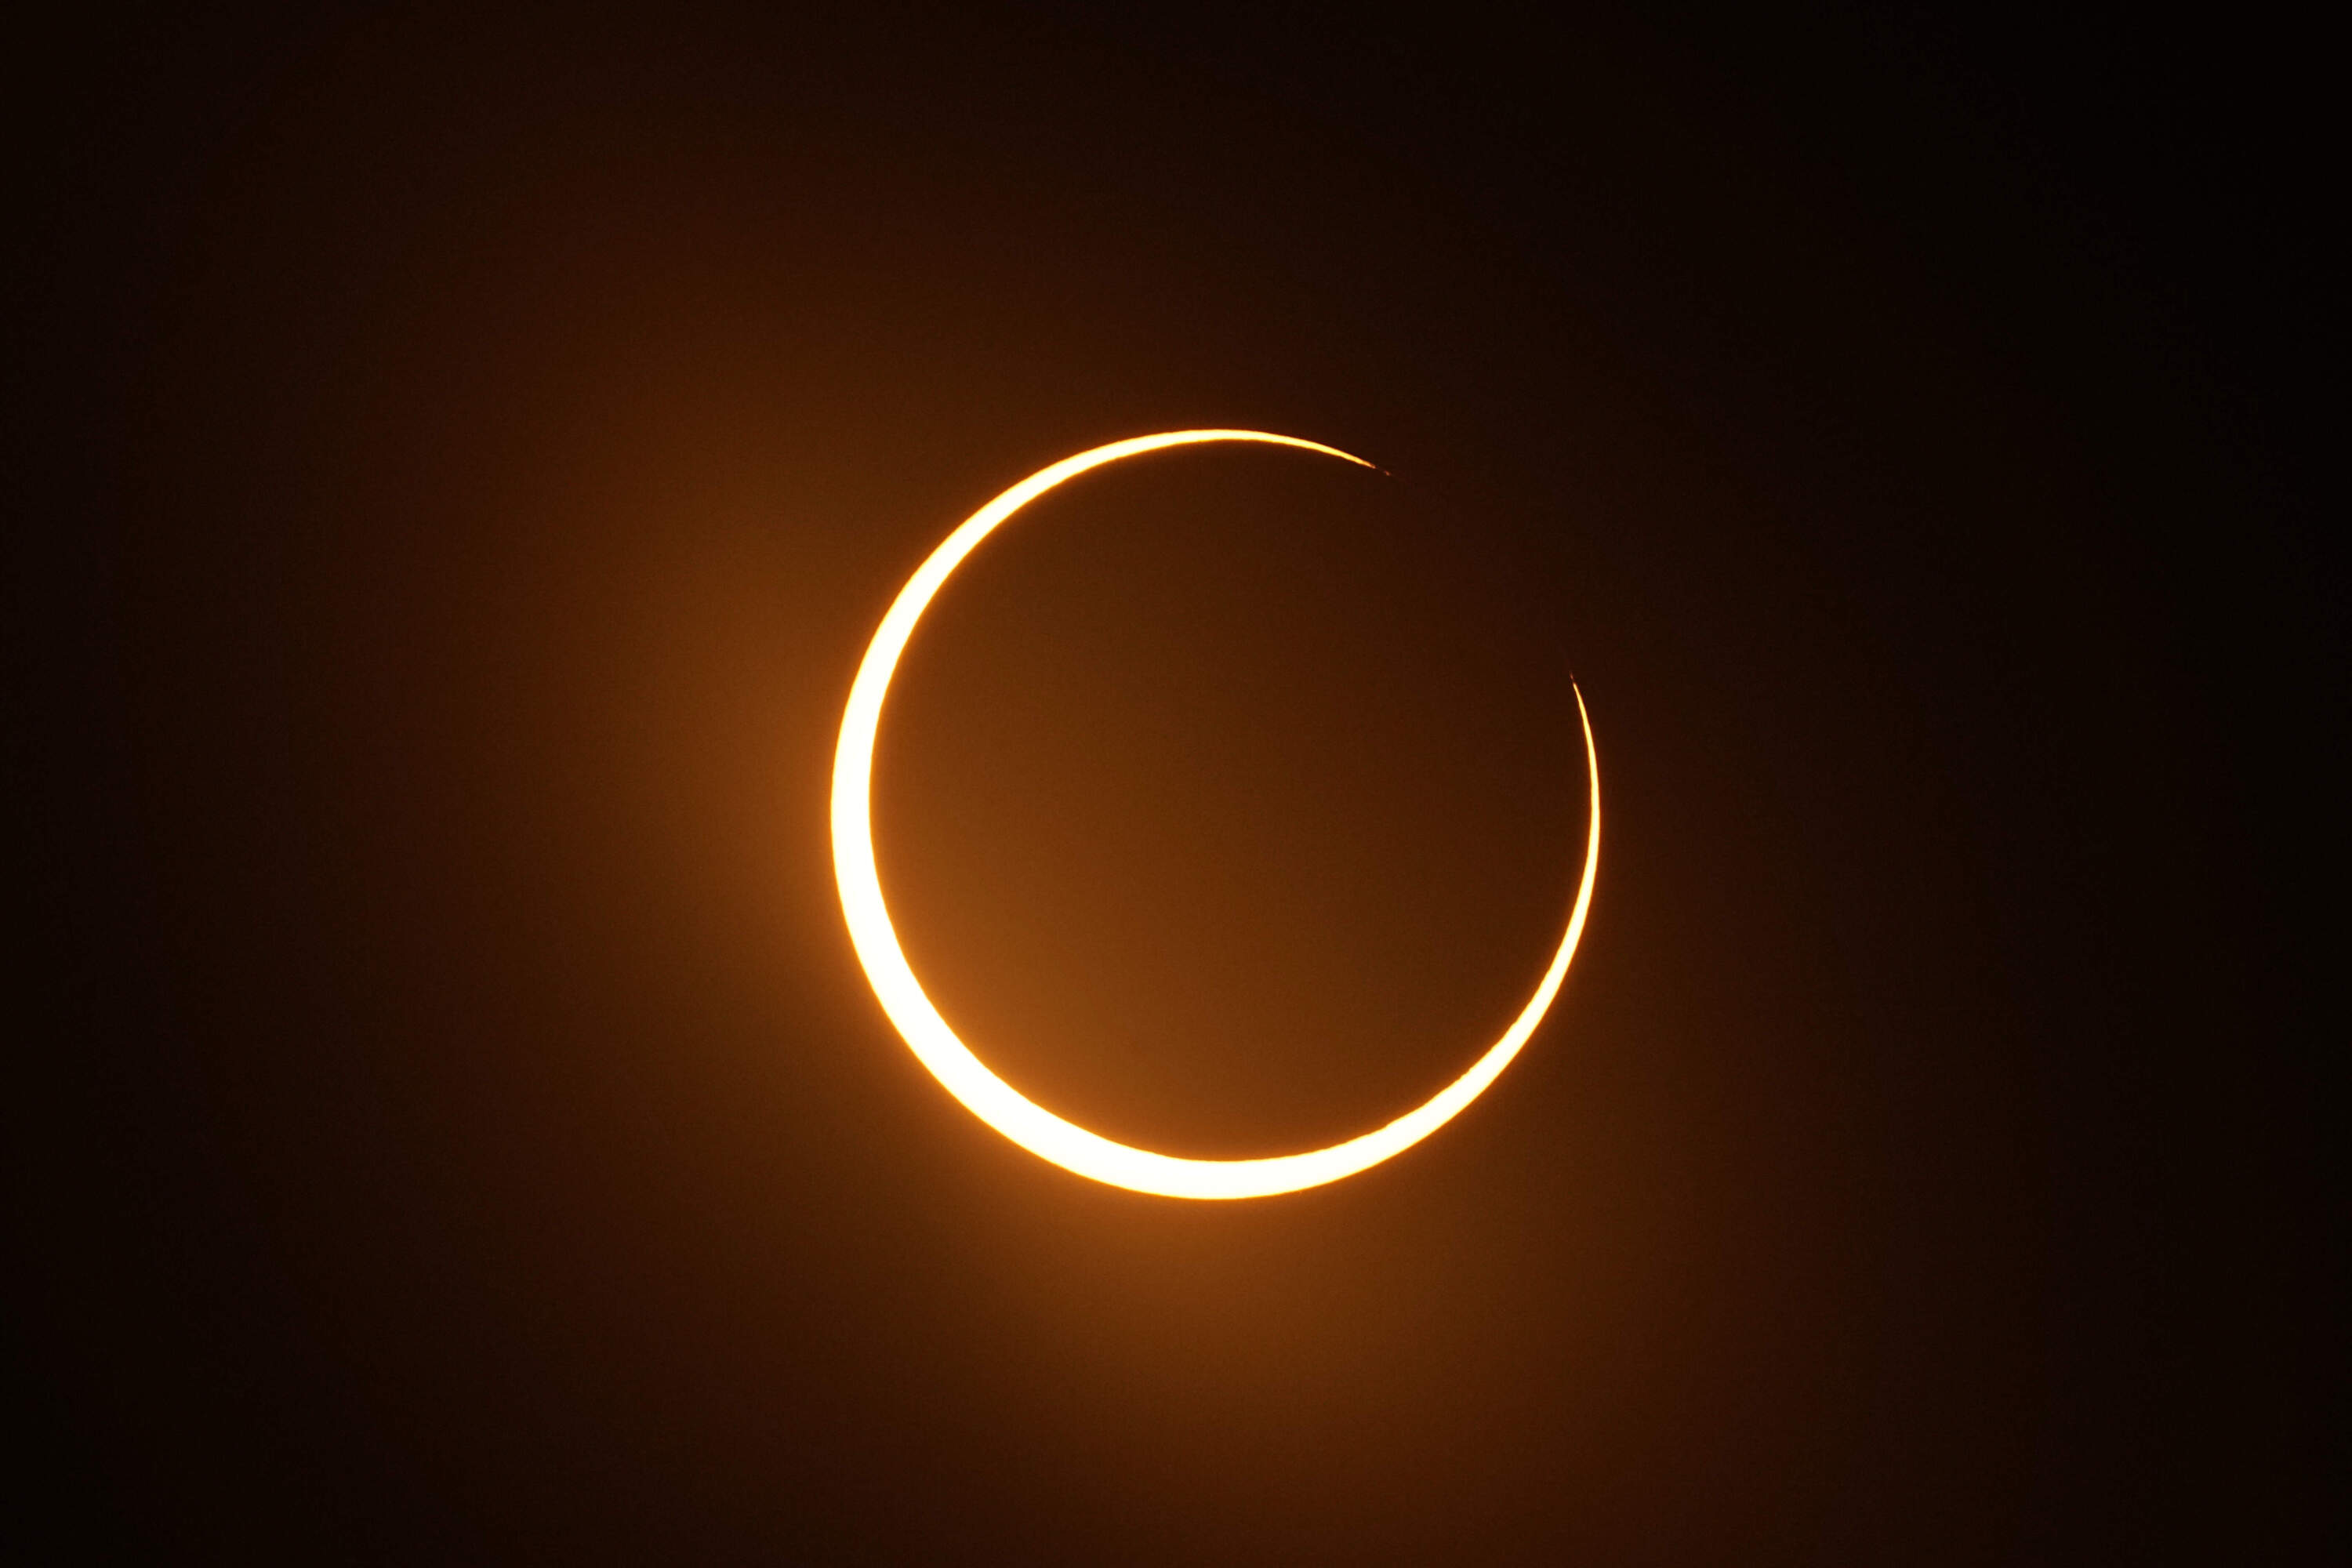 2023 Annular Eclipse: Where & When - NASA Science